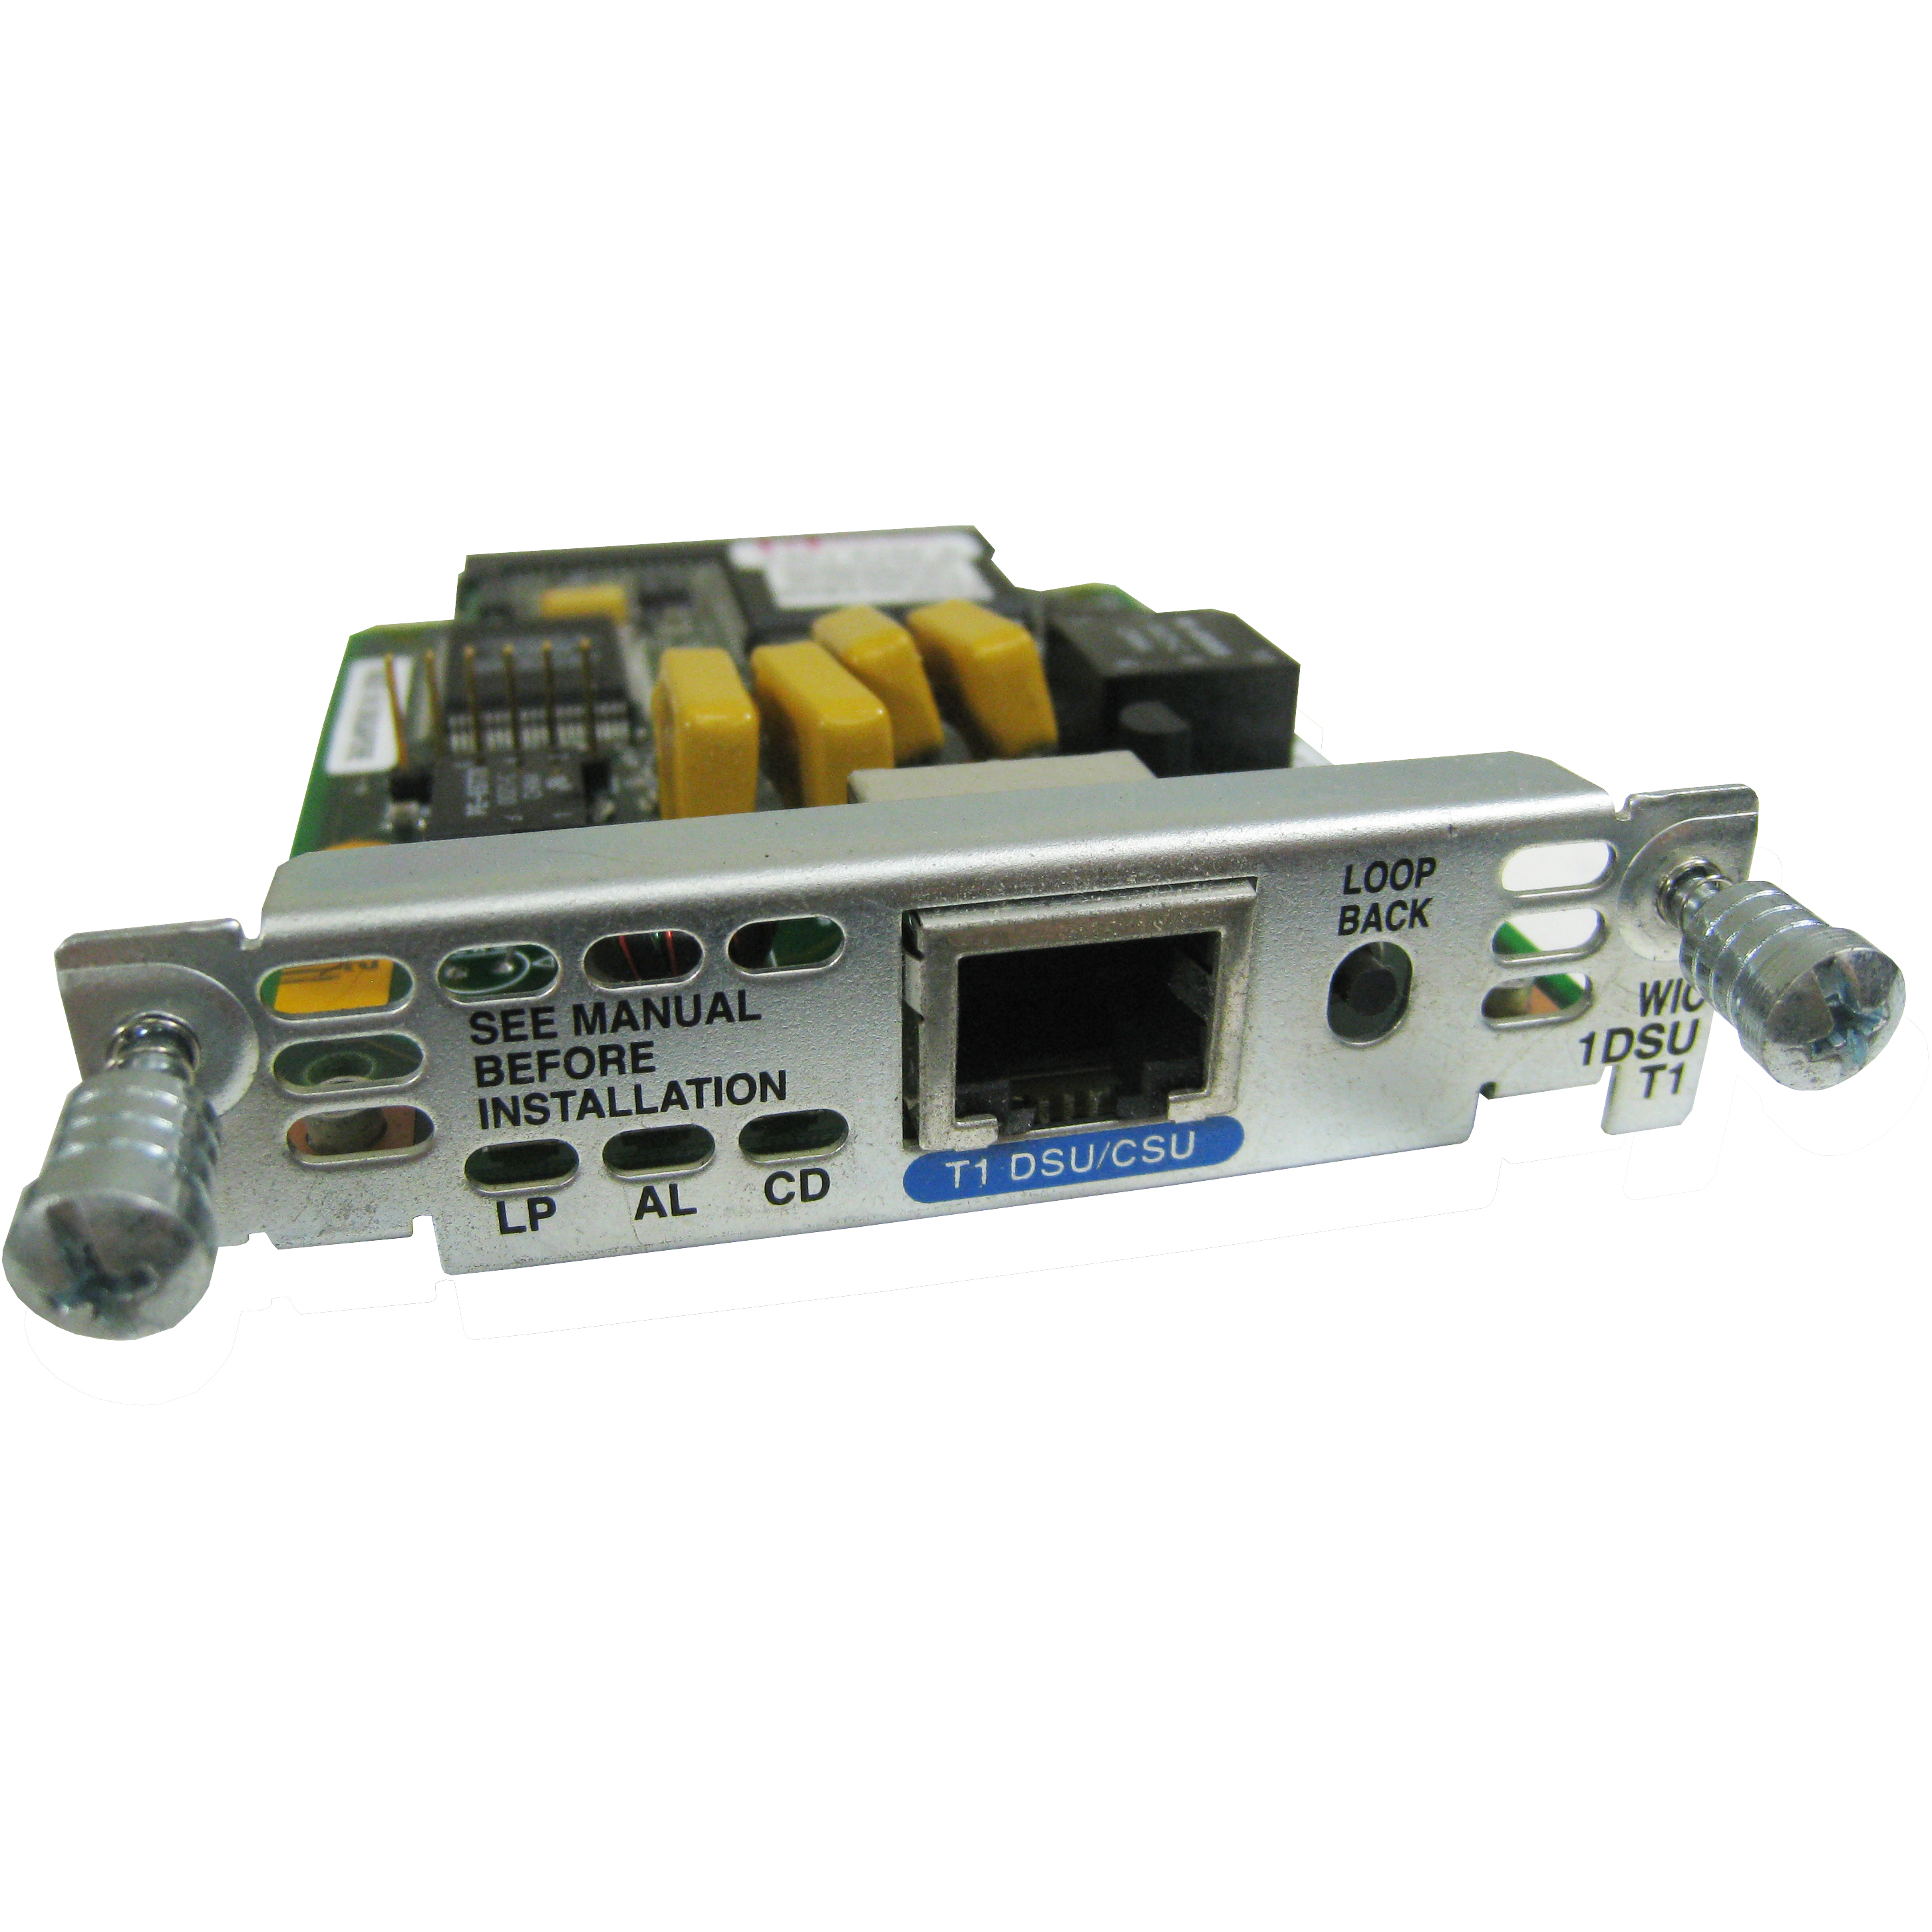 Cisco WIC-1DSU-T1